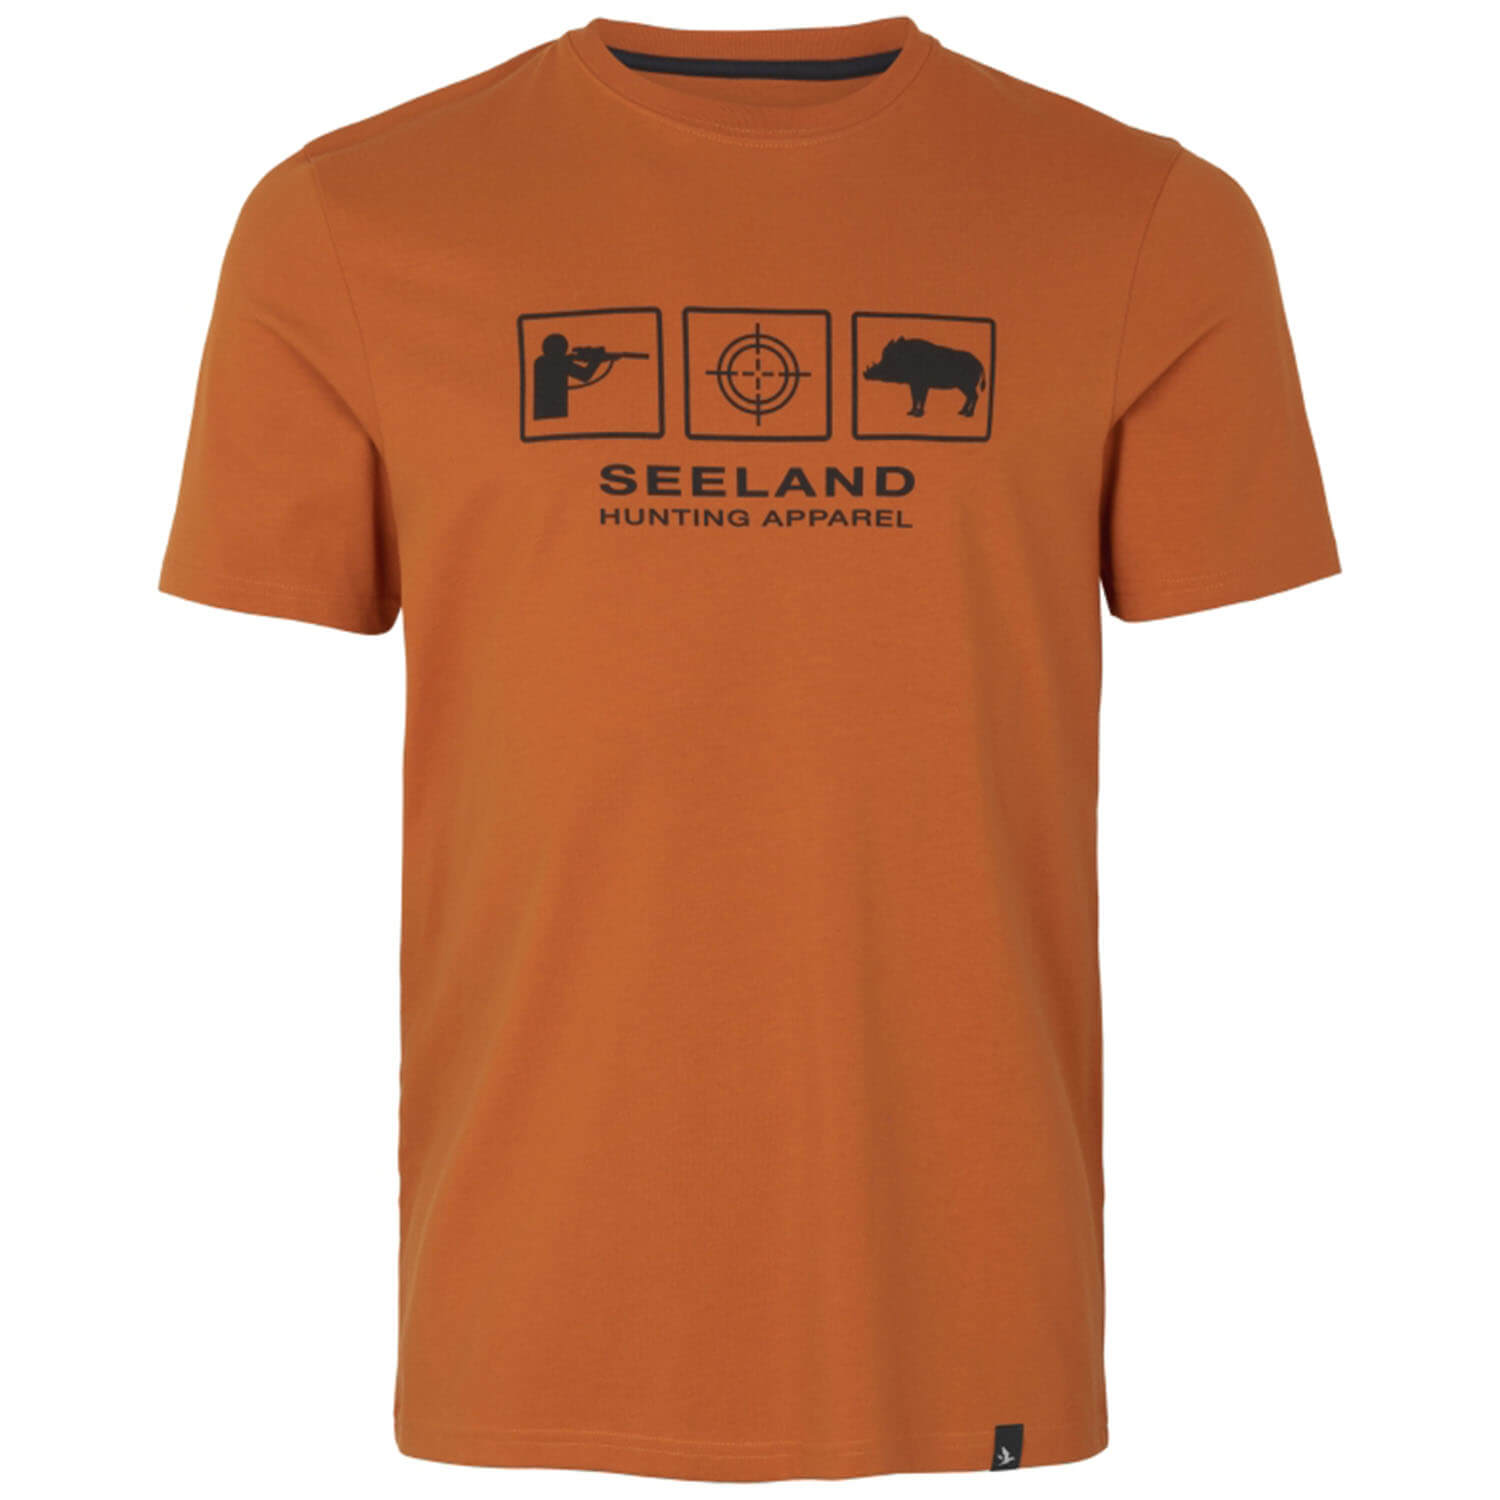  Seeland T-shirt Lanner (Gouden Vlam) - Jachtshirts